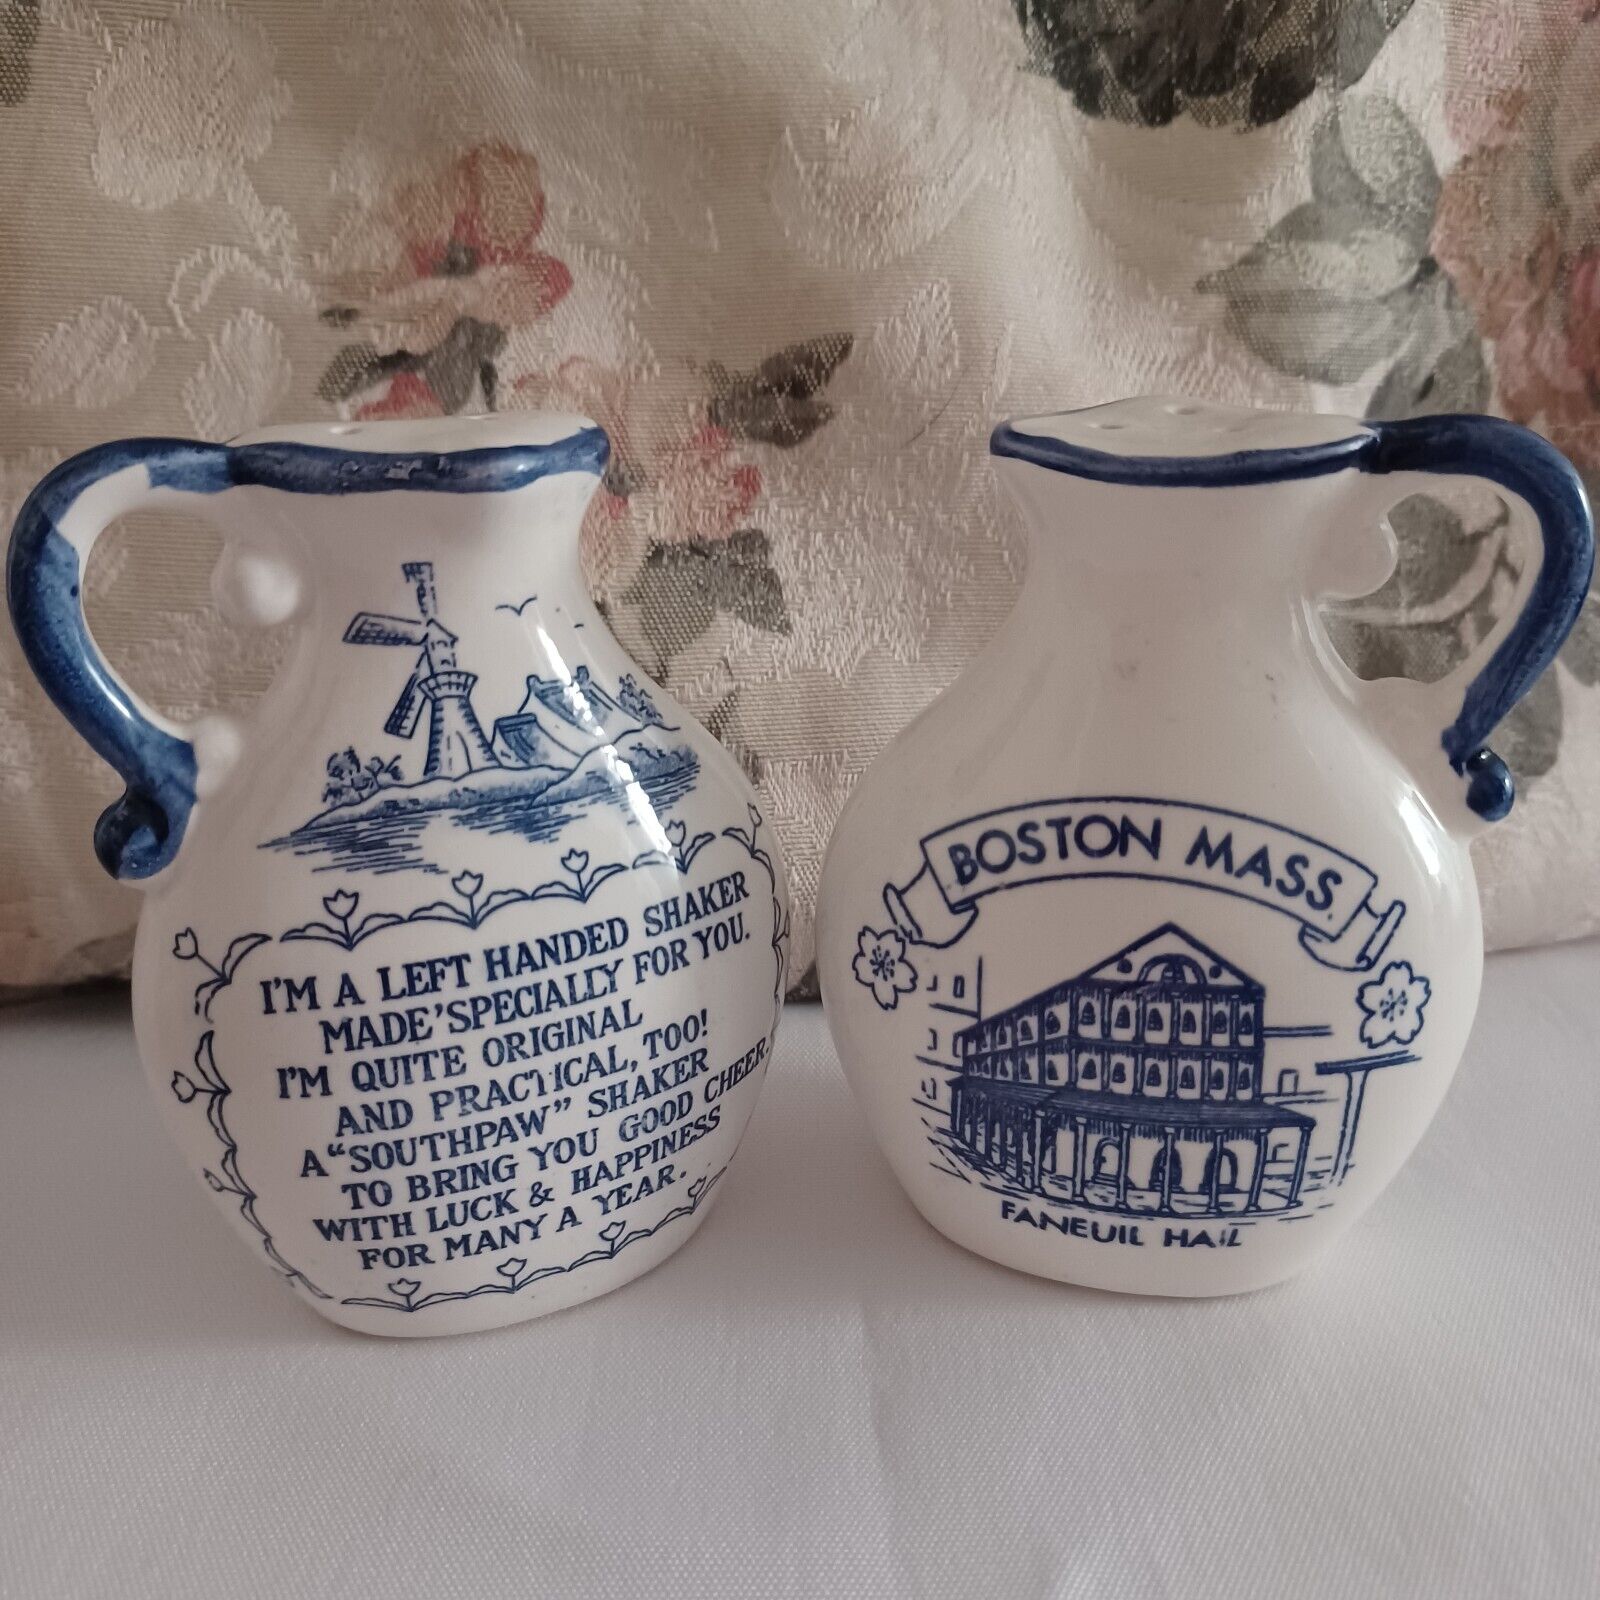 Vintage Left Handed Salt & Pepper Shakers Boston Mass Blue Delft Design Japan